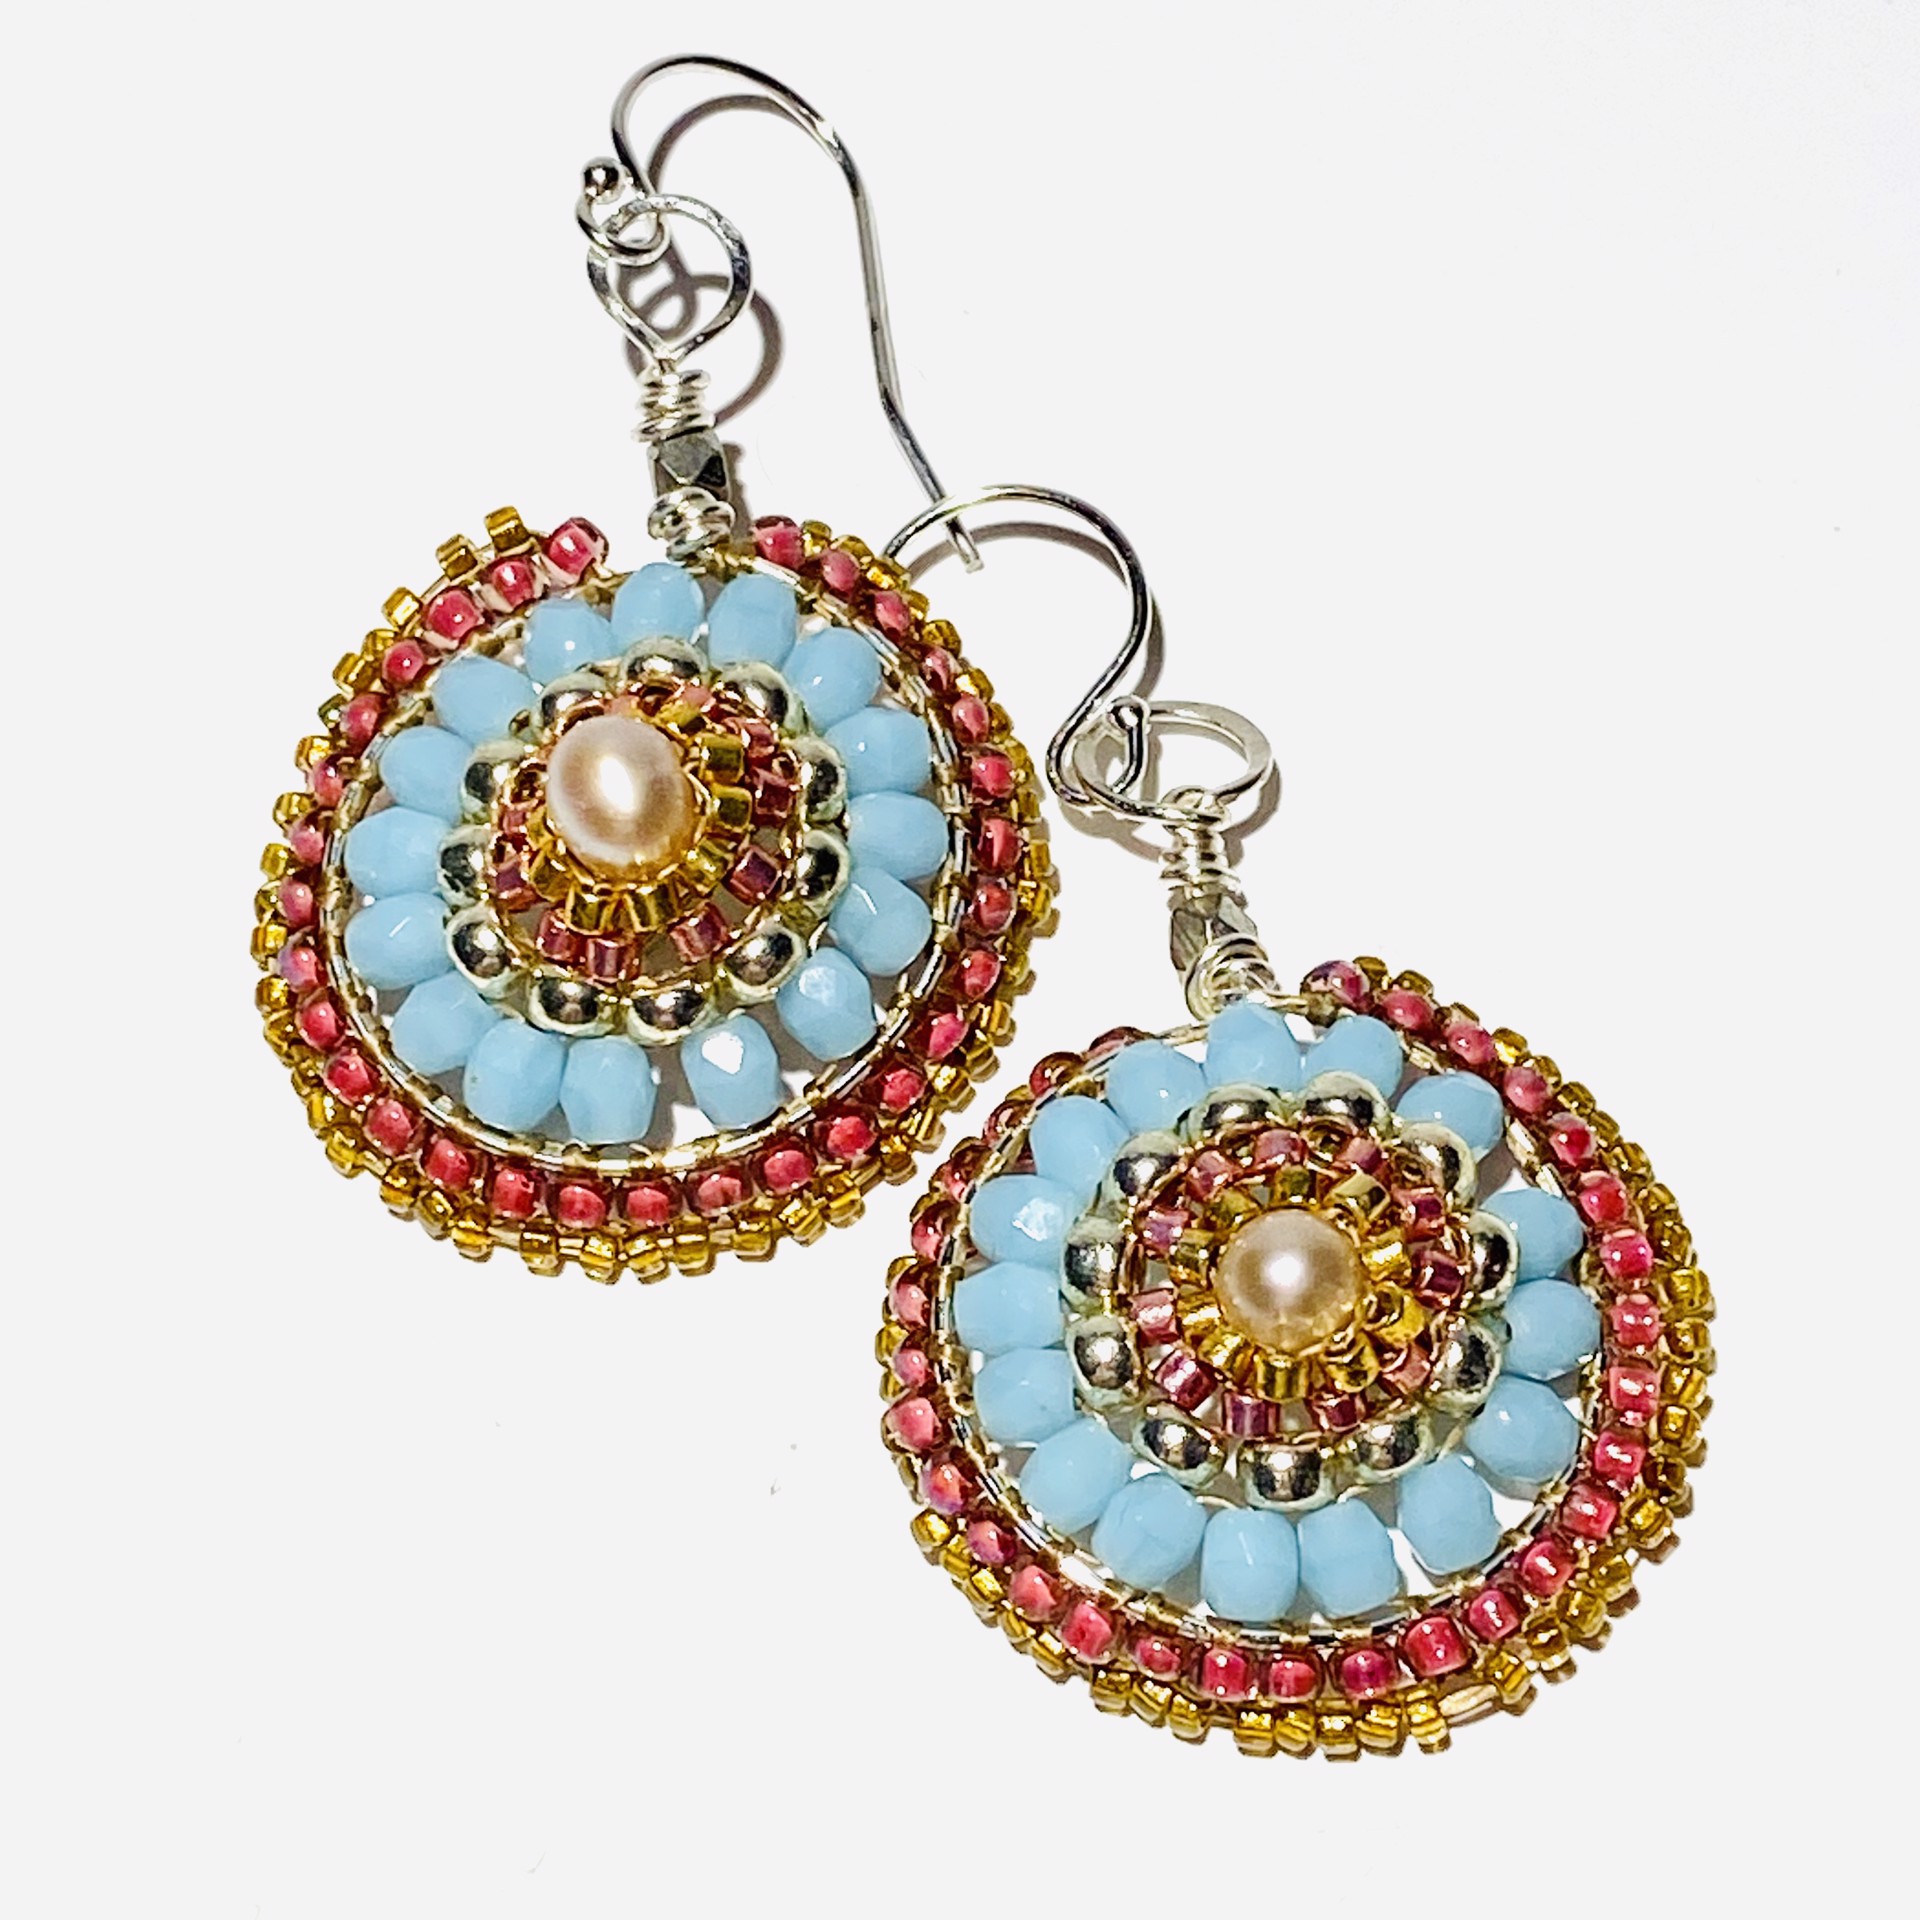 Gemstone Bead and Pearl Earrings by Barbara Duimstra